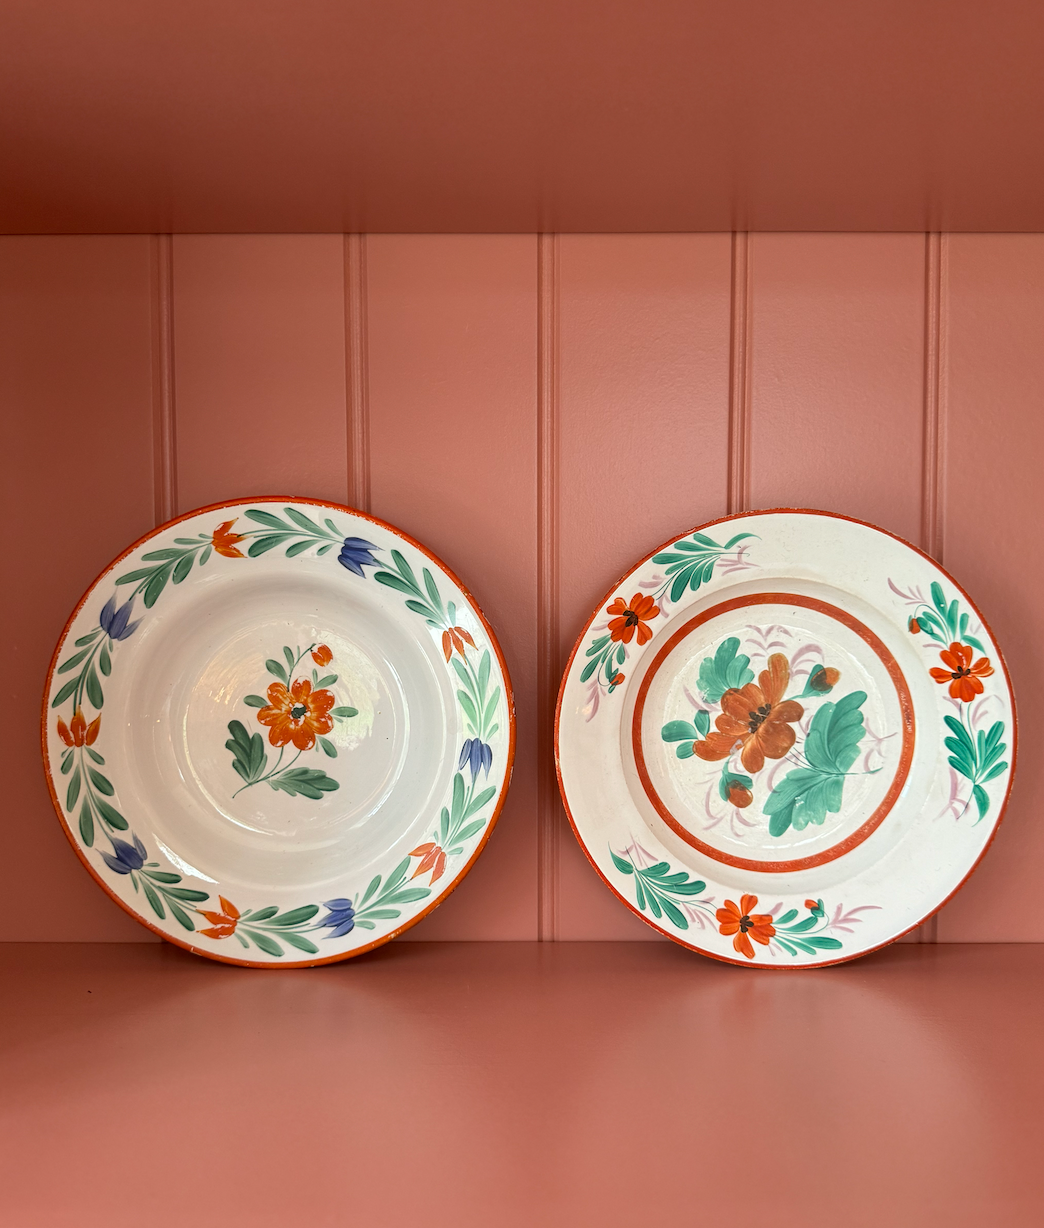 Unique 2 Piece Set of Rare & Antique Decorative Hungarian Wall Plates, Isabelle